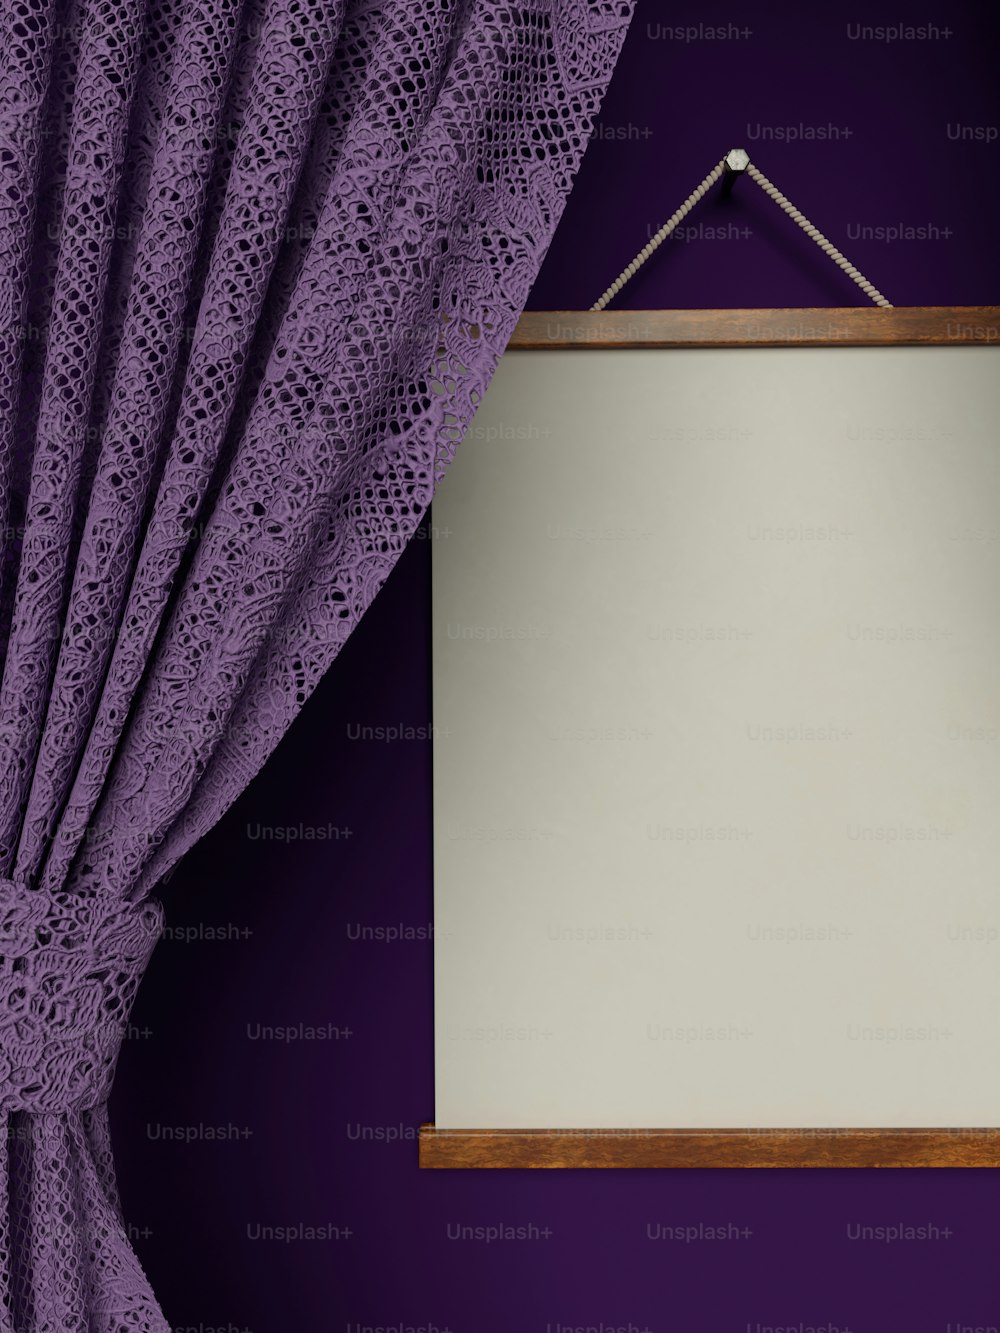 Una pizarra blanca colgada en una pared púrpura junto a una cortina púrpura